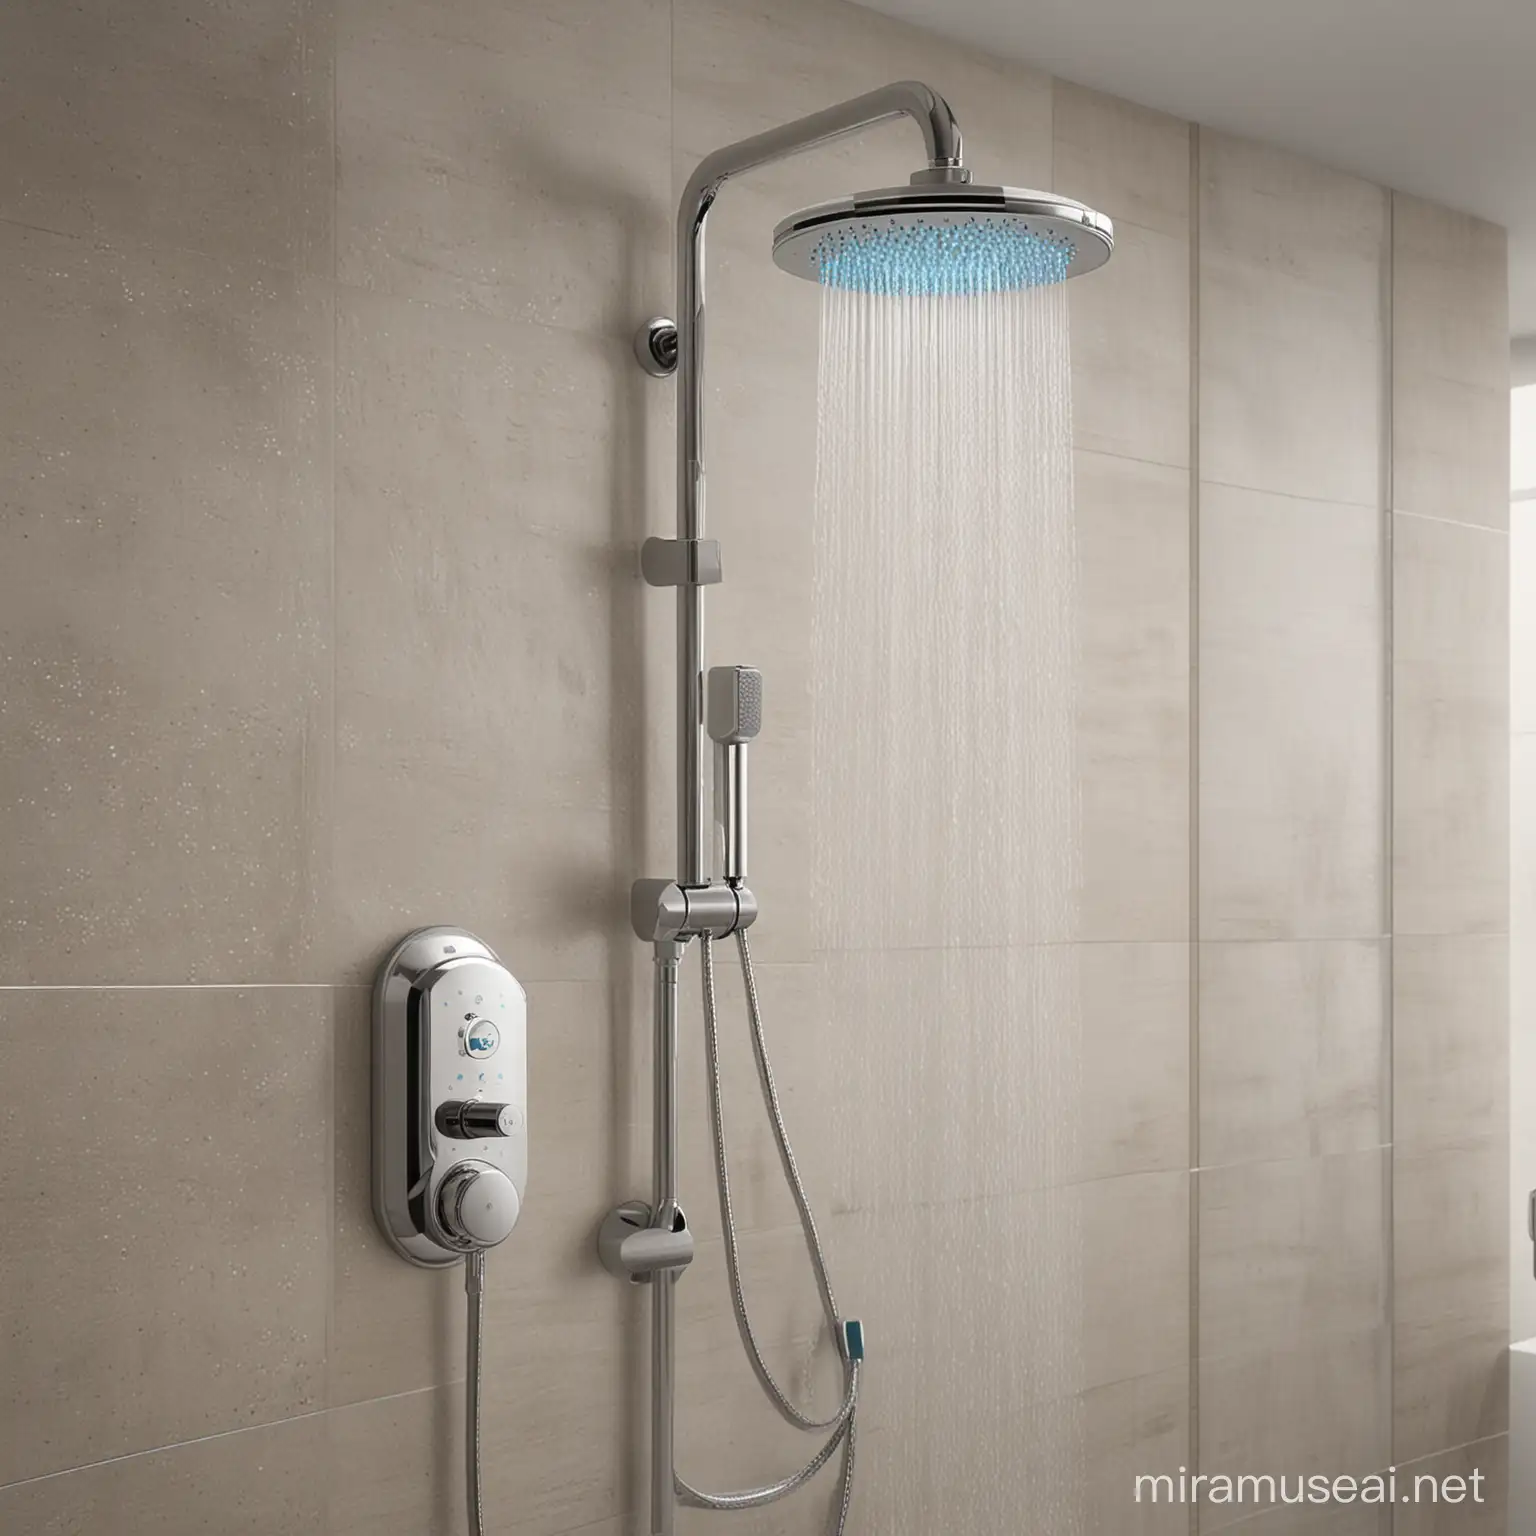 AIEnhanced Customizable Water Pressure Shower